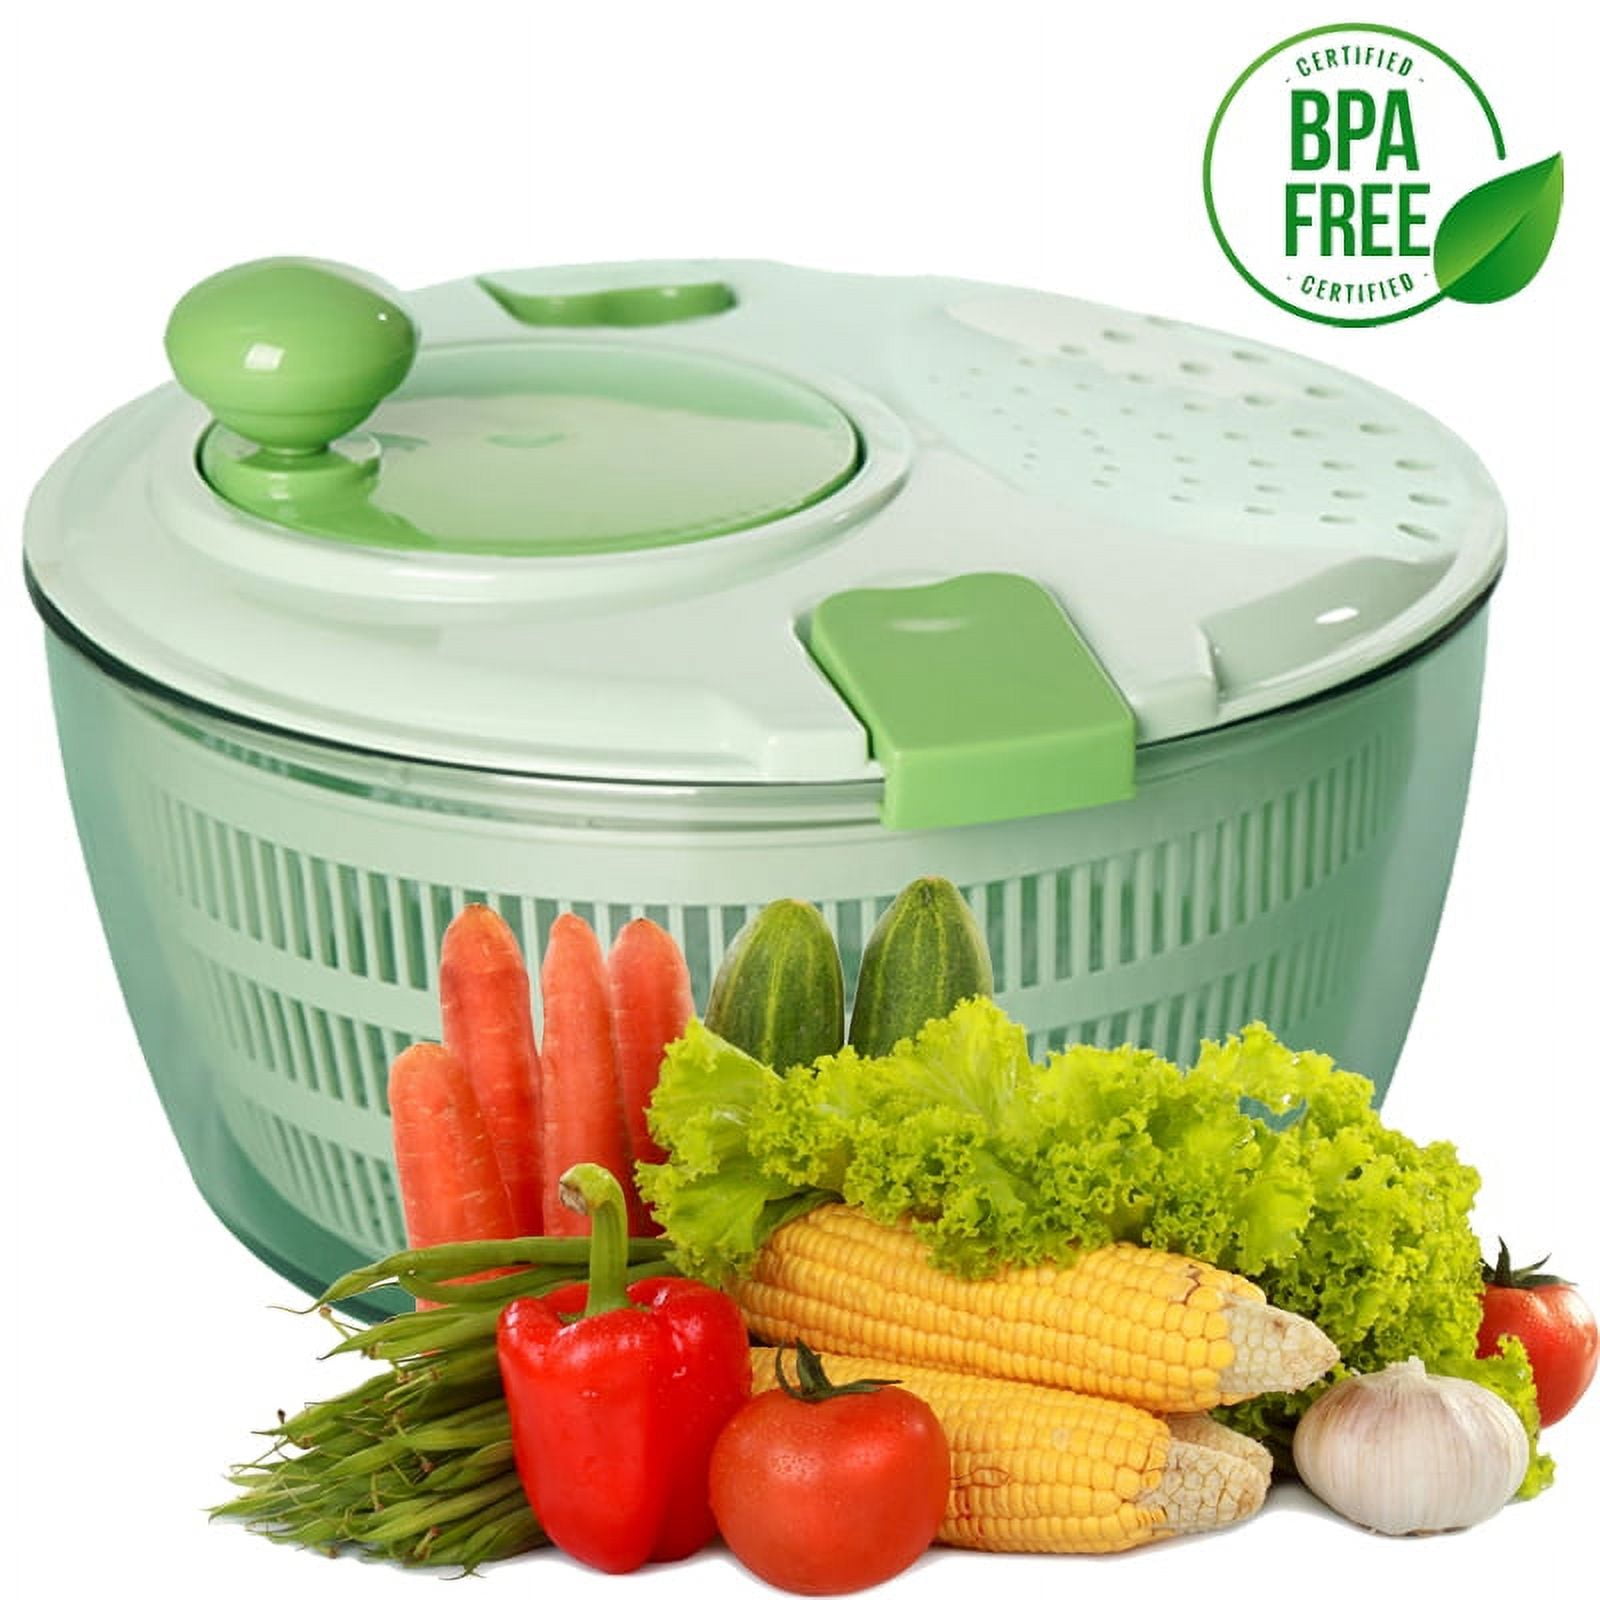 Salad Spinner Large Lettuce Spinner for Vegetable wash, Lettuce Dryer with  Drain Colander and no BPA - Multi-Functional Kitchen Helper 